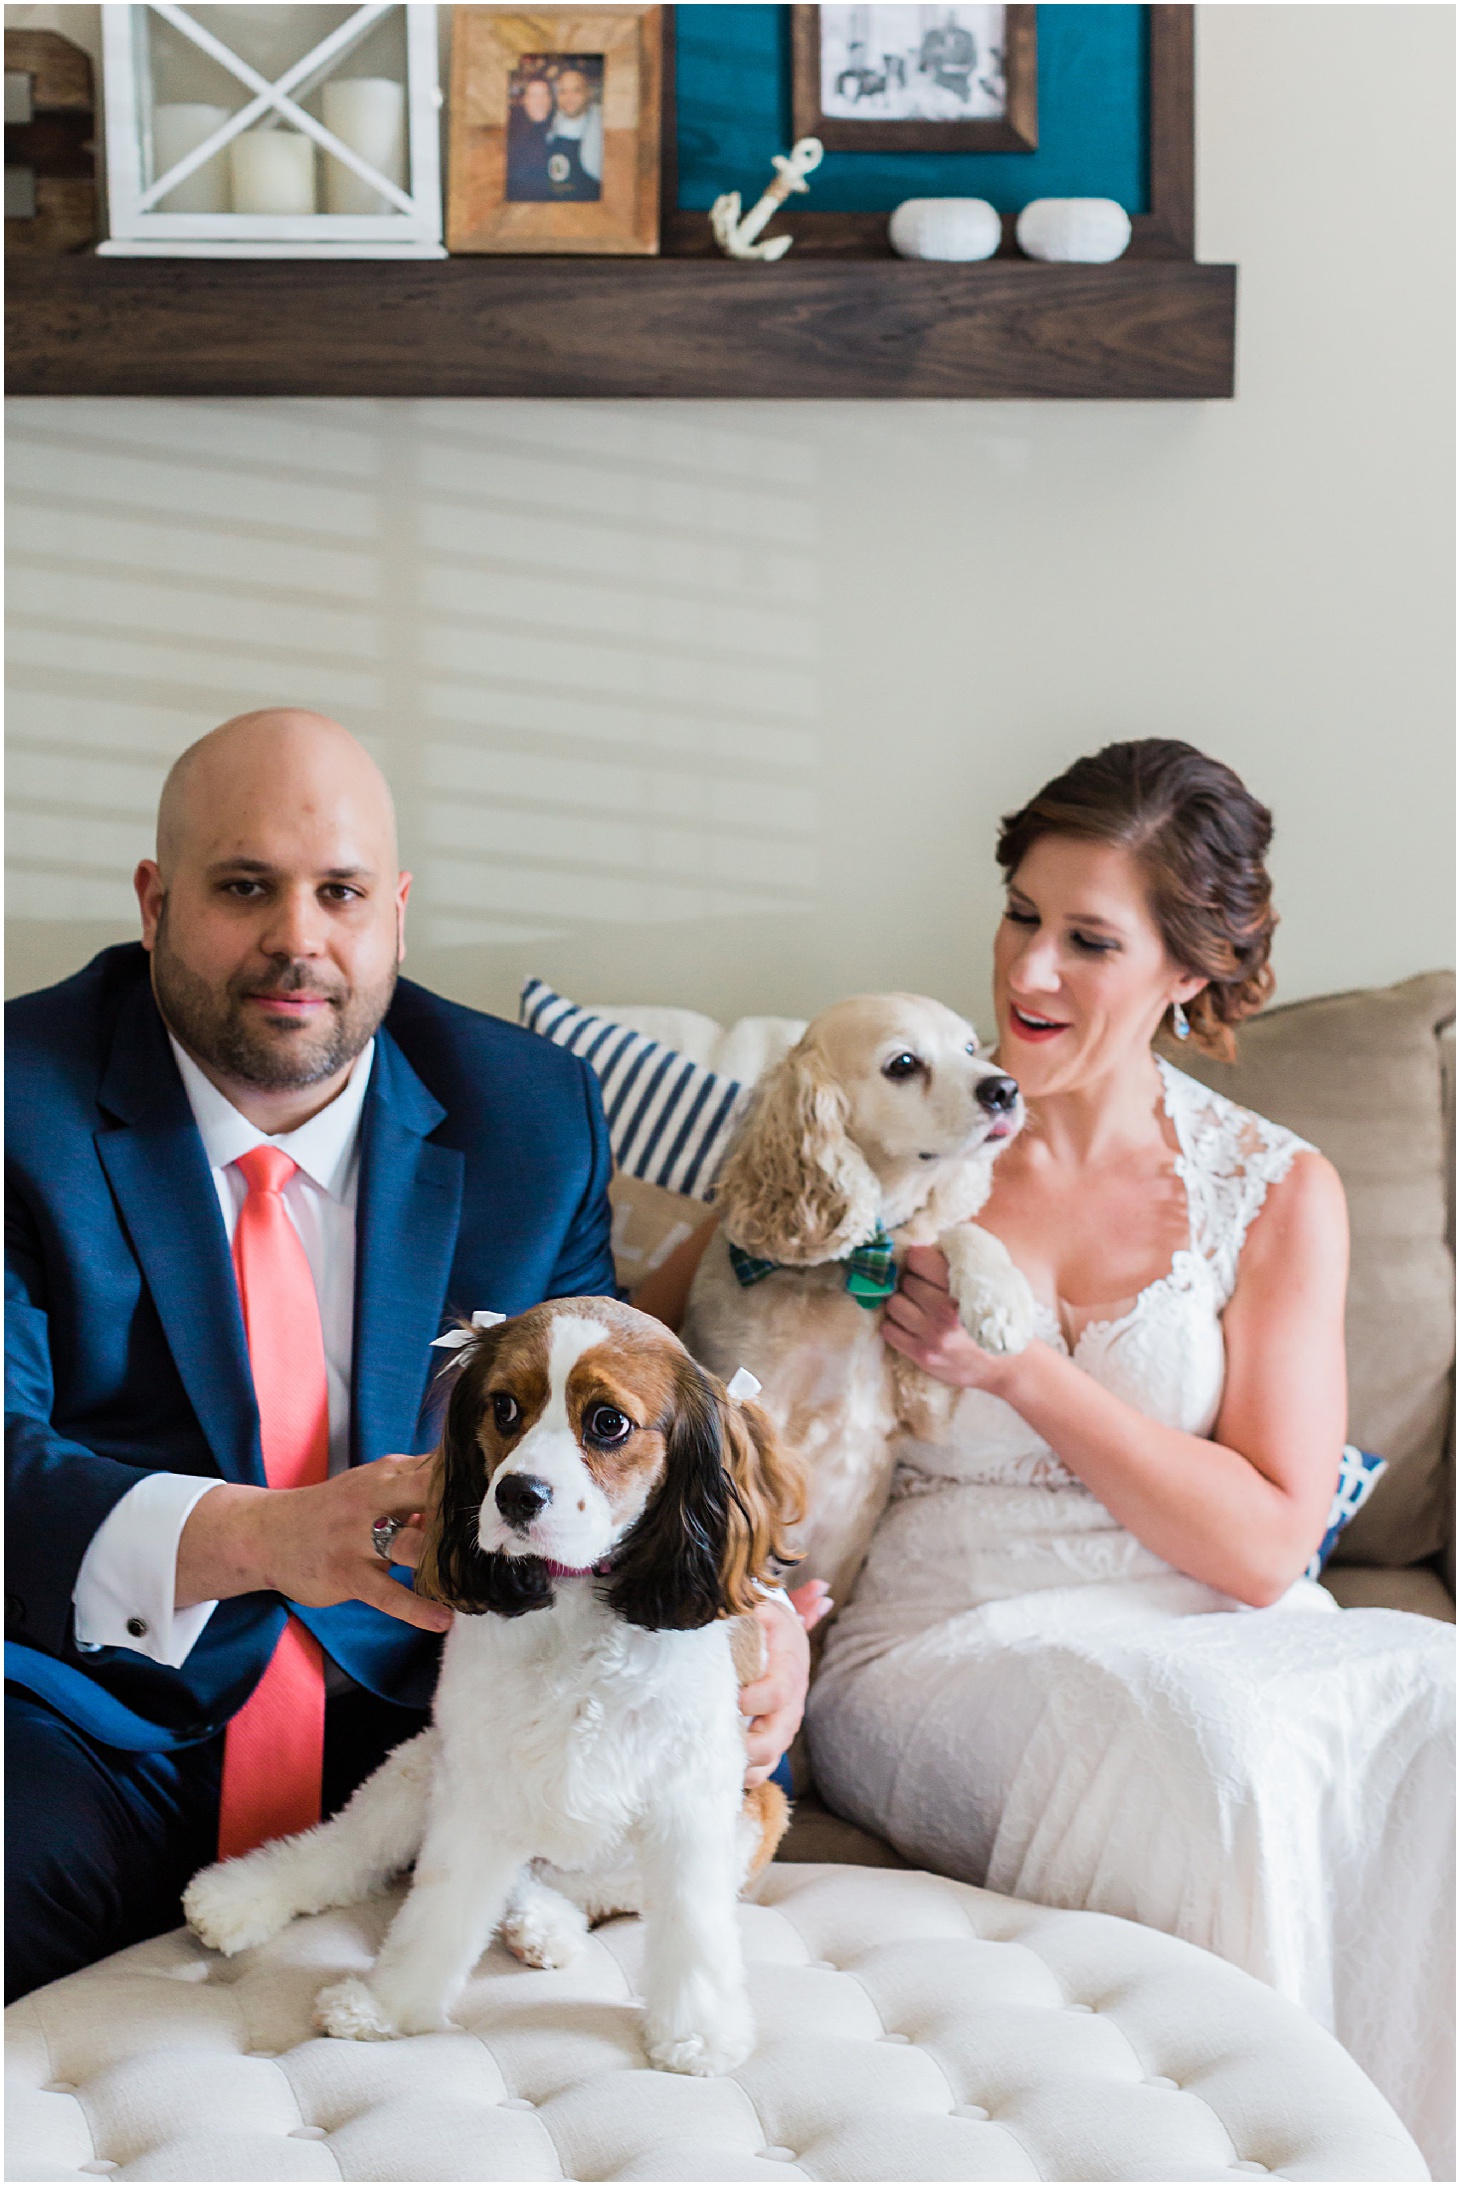 Family Portraits with dogs | Top Washington DC wedding photographer Sarah Bradshaw